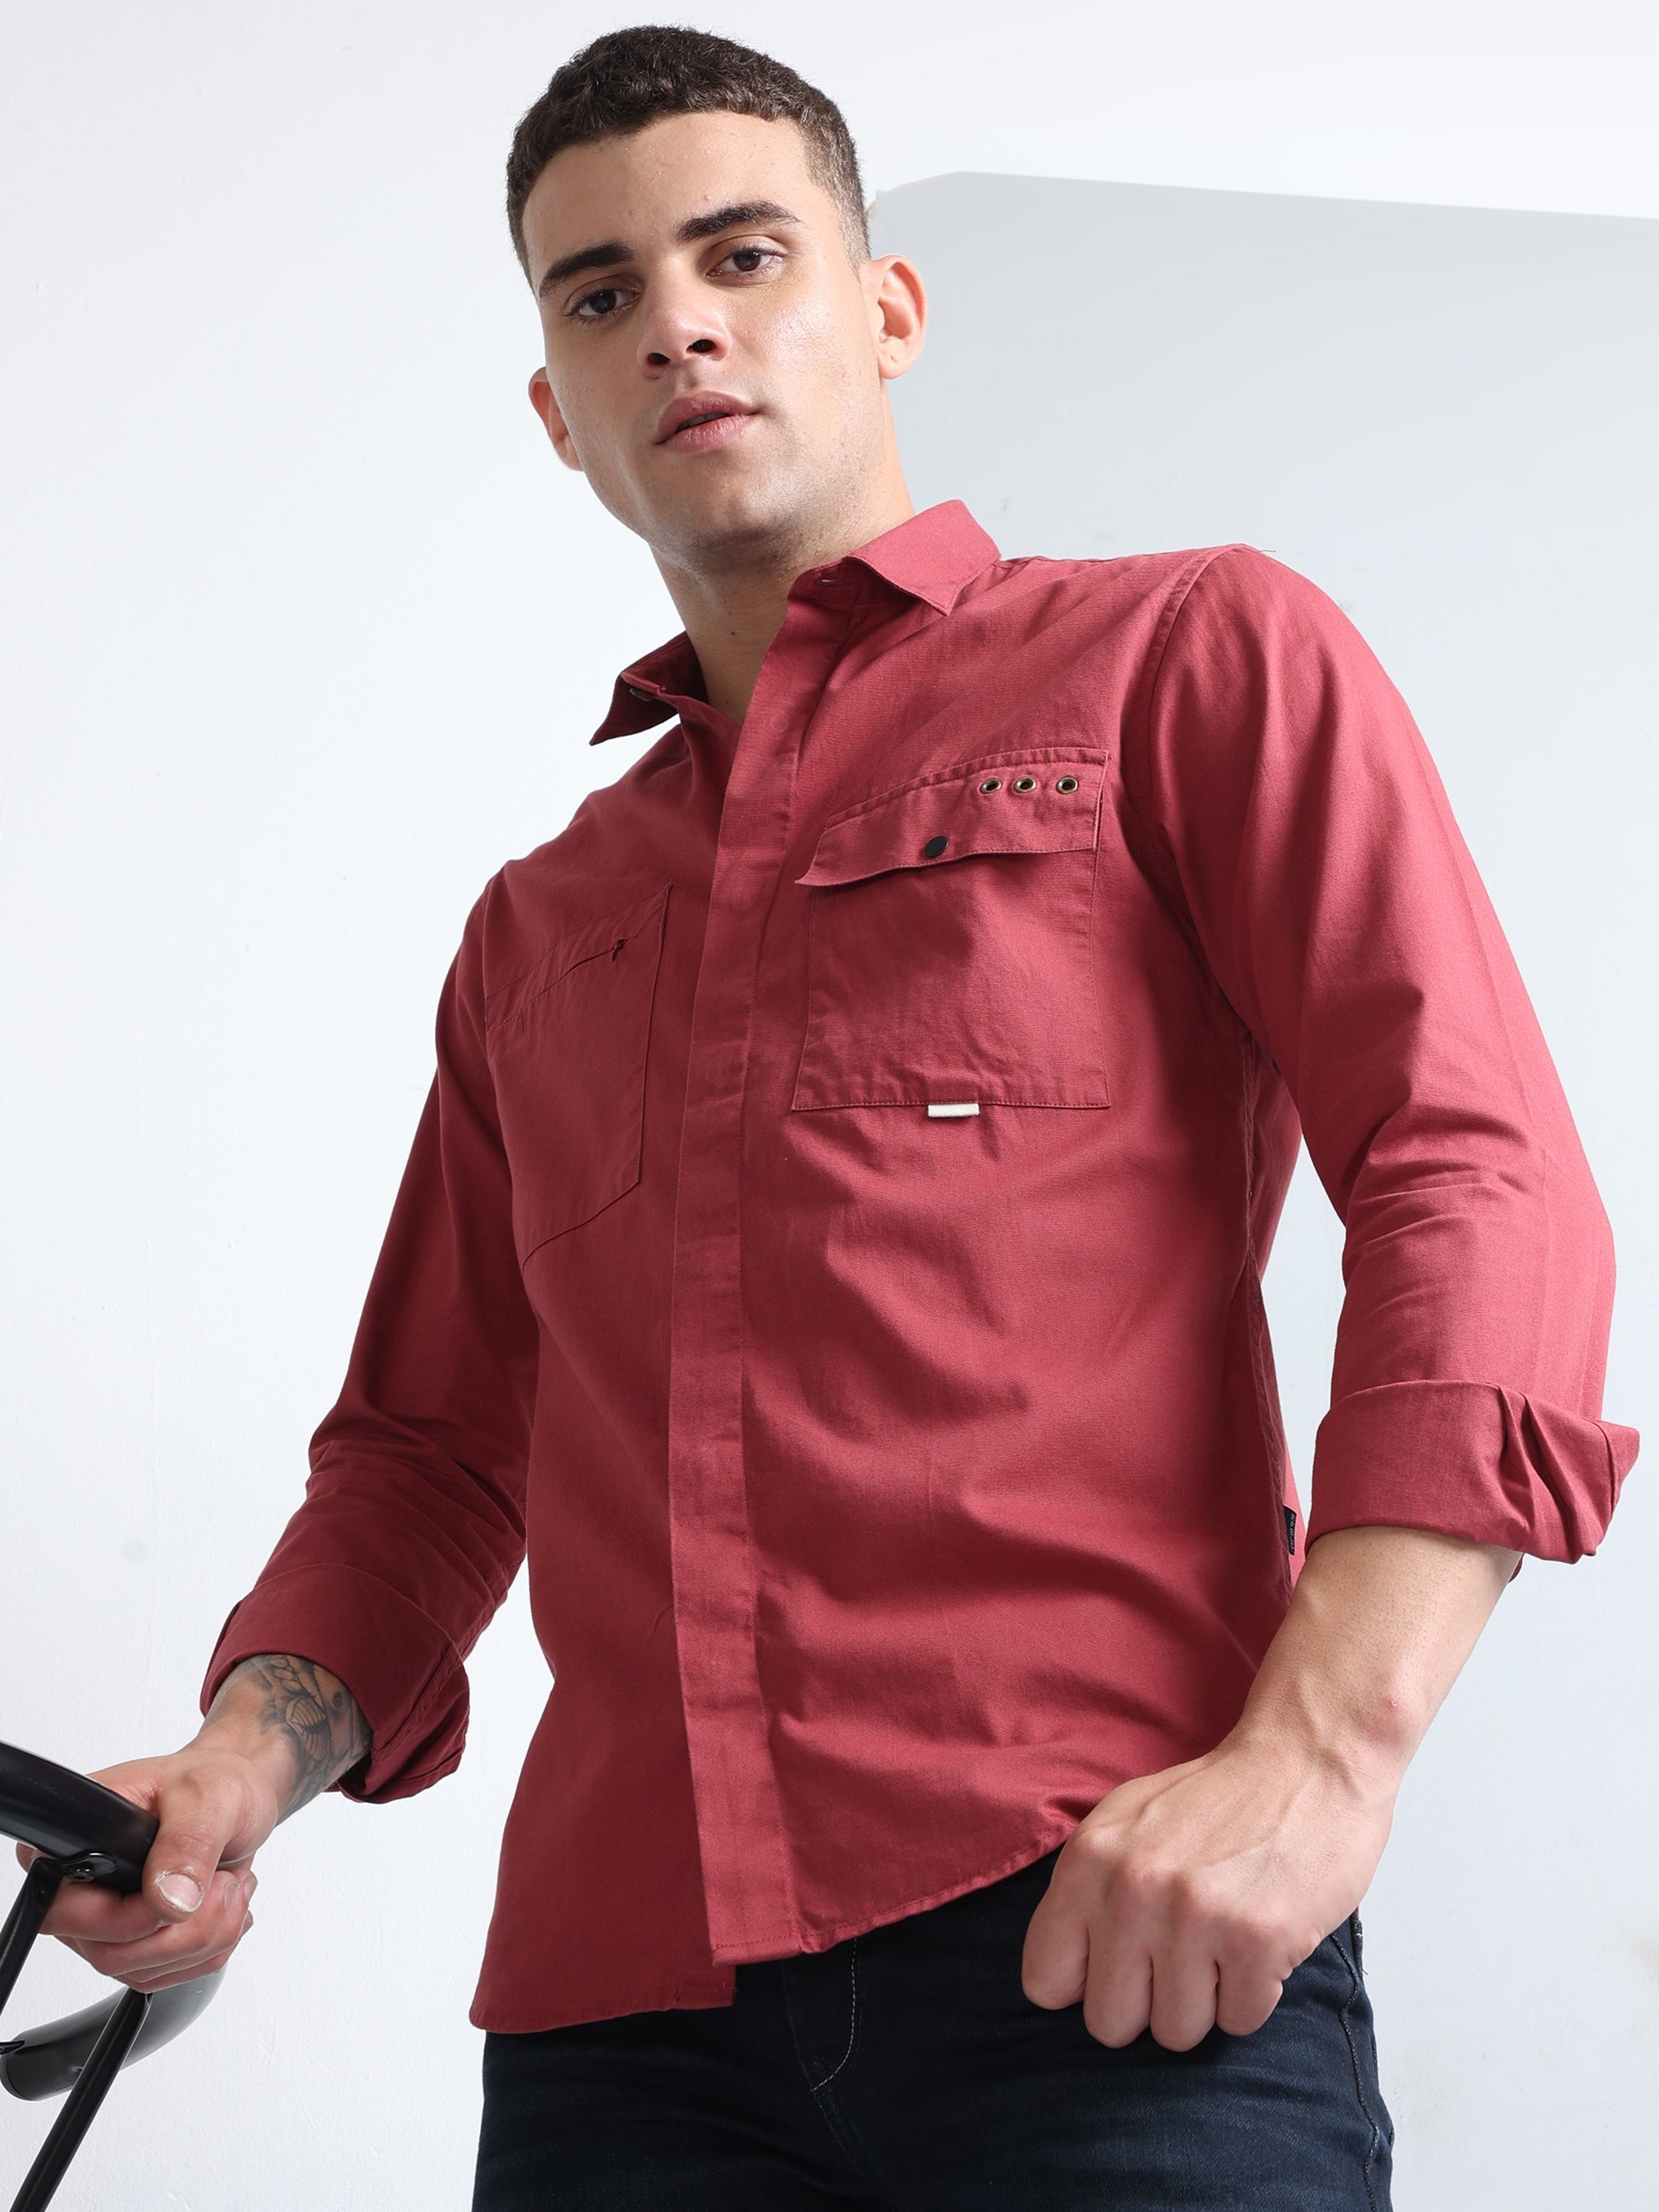 Buy Hidden Placket Stylish Single Pocket Mens Shirt Online.